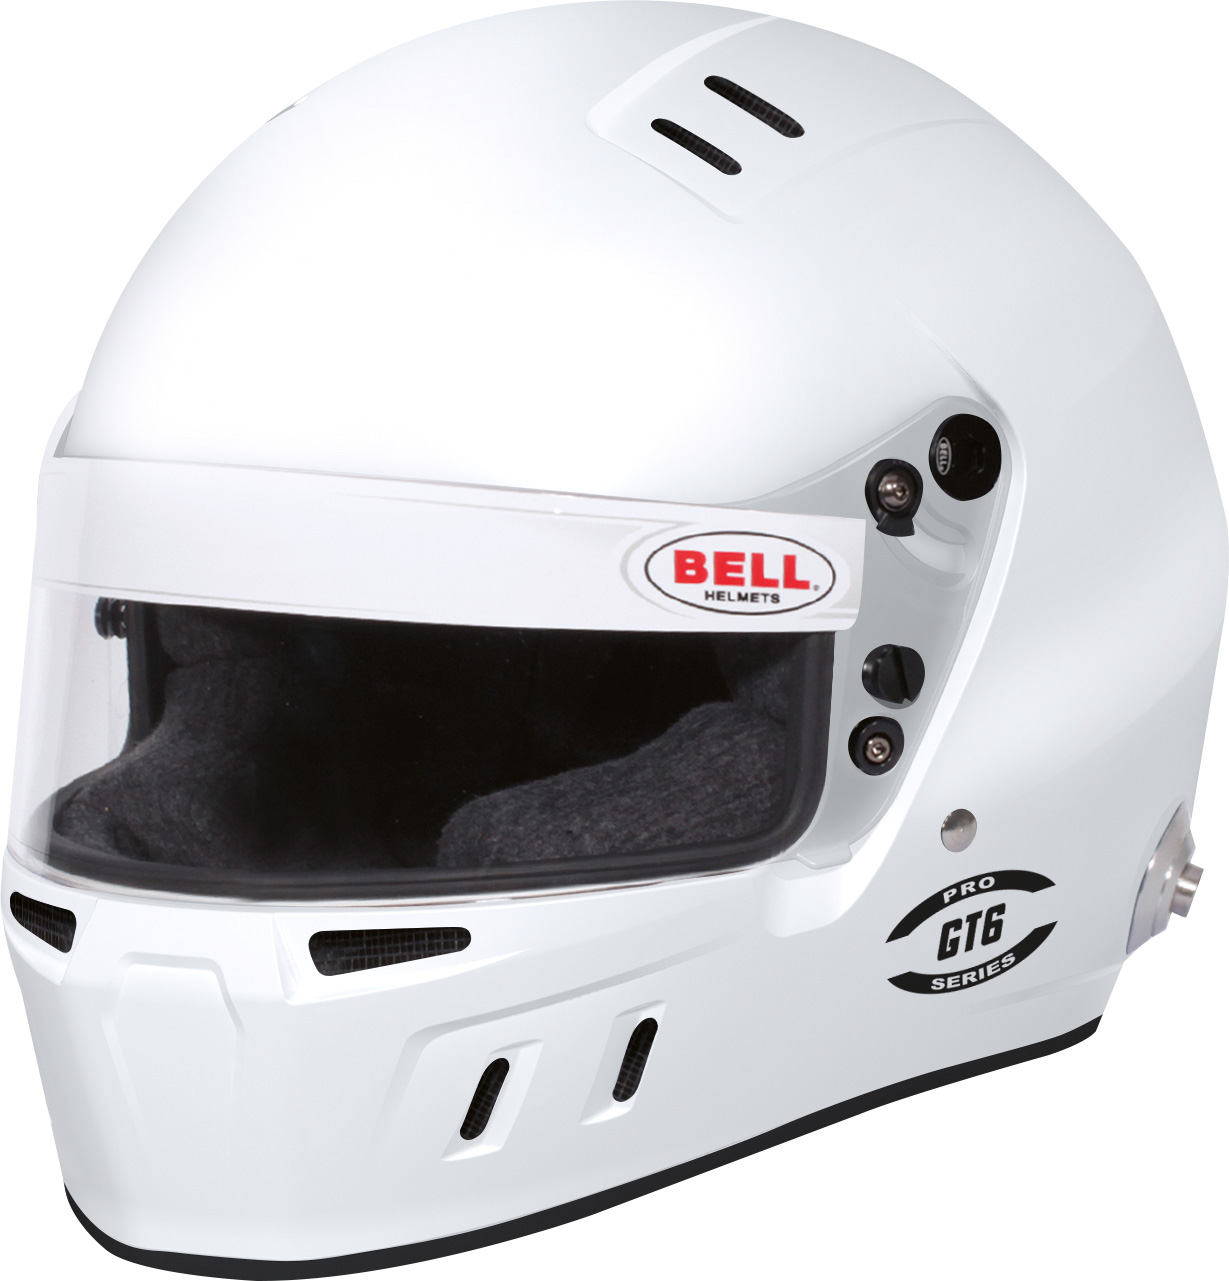 BELL Helm GT6 Pro